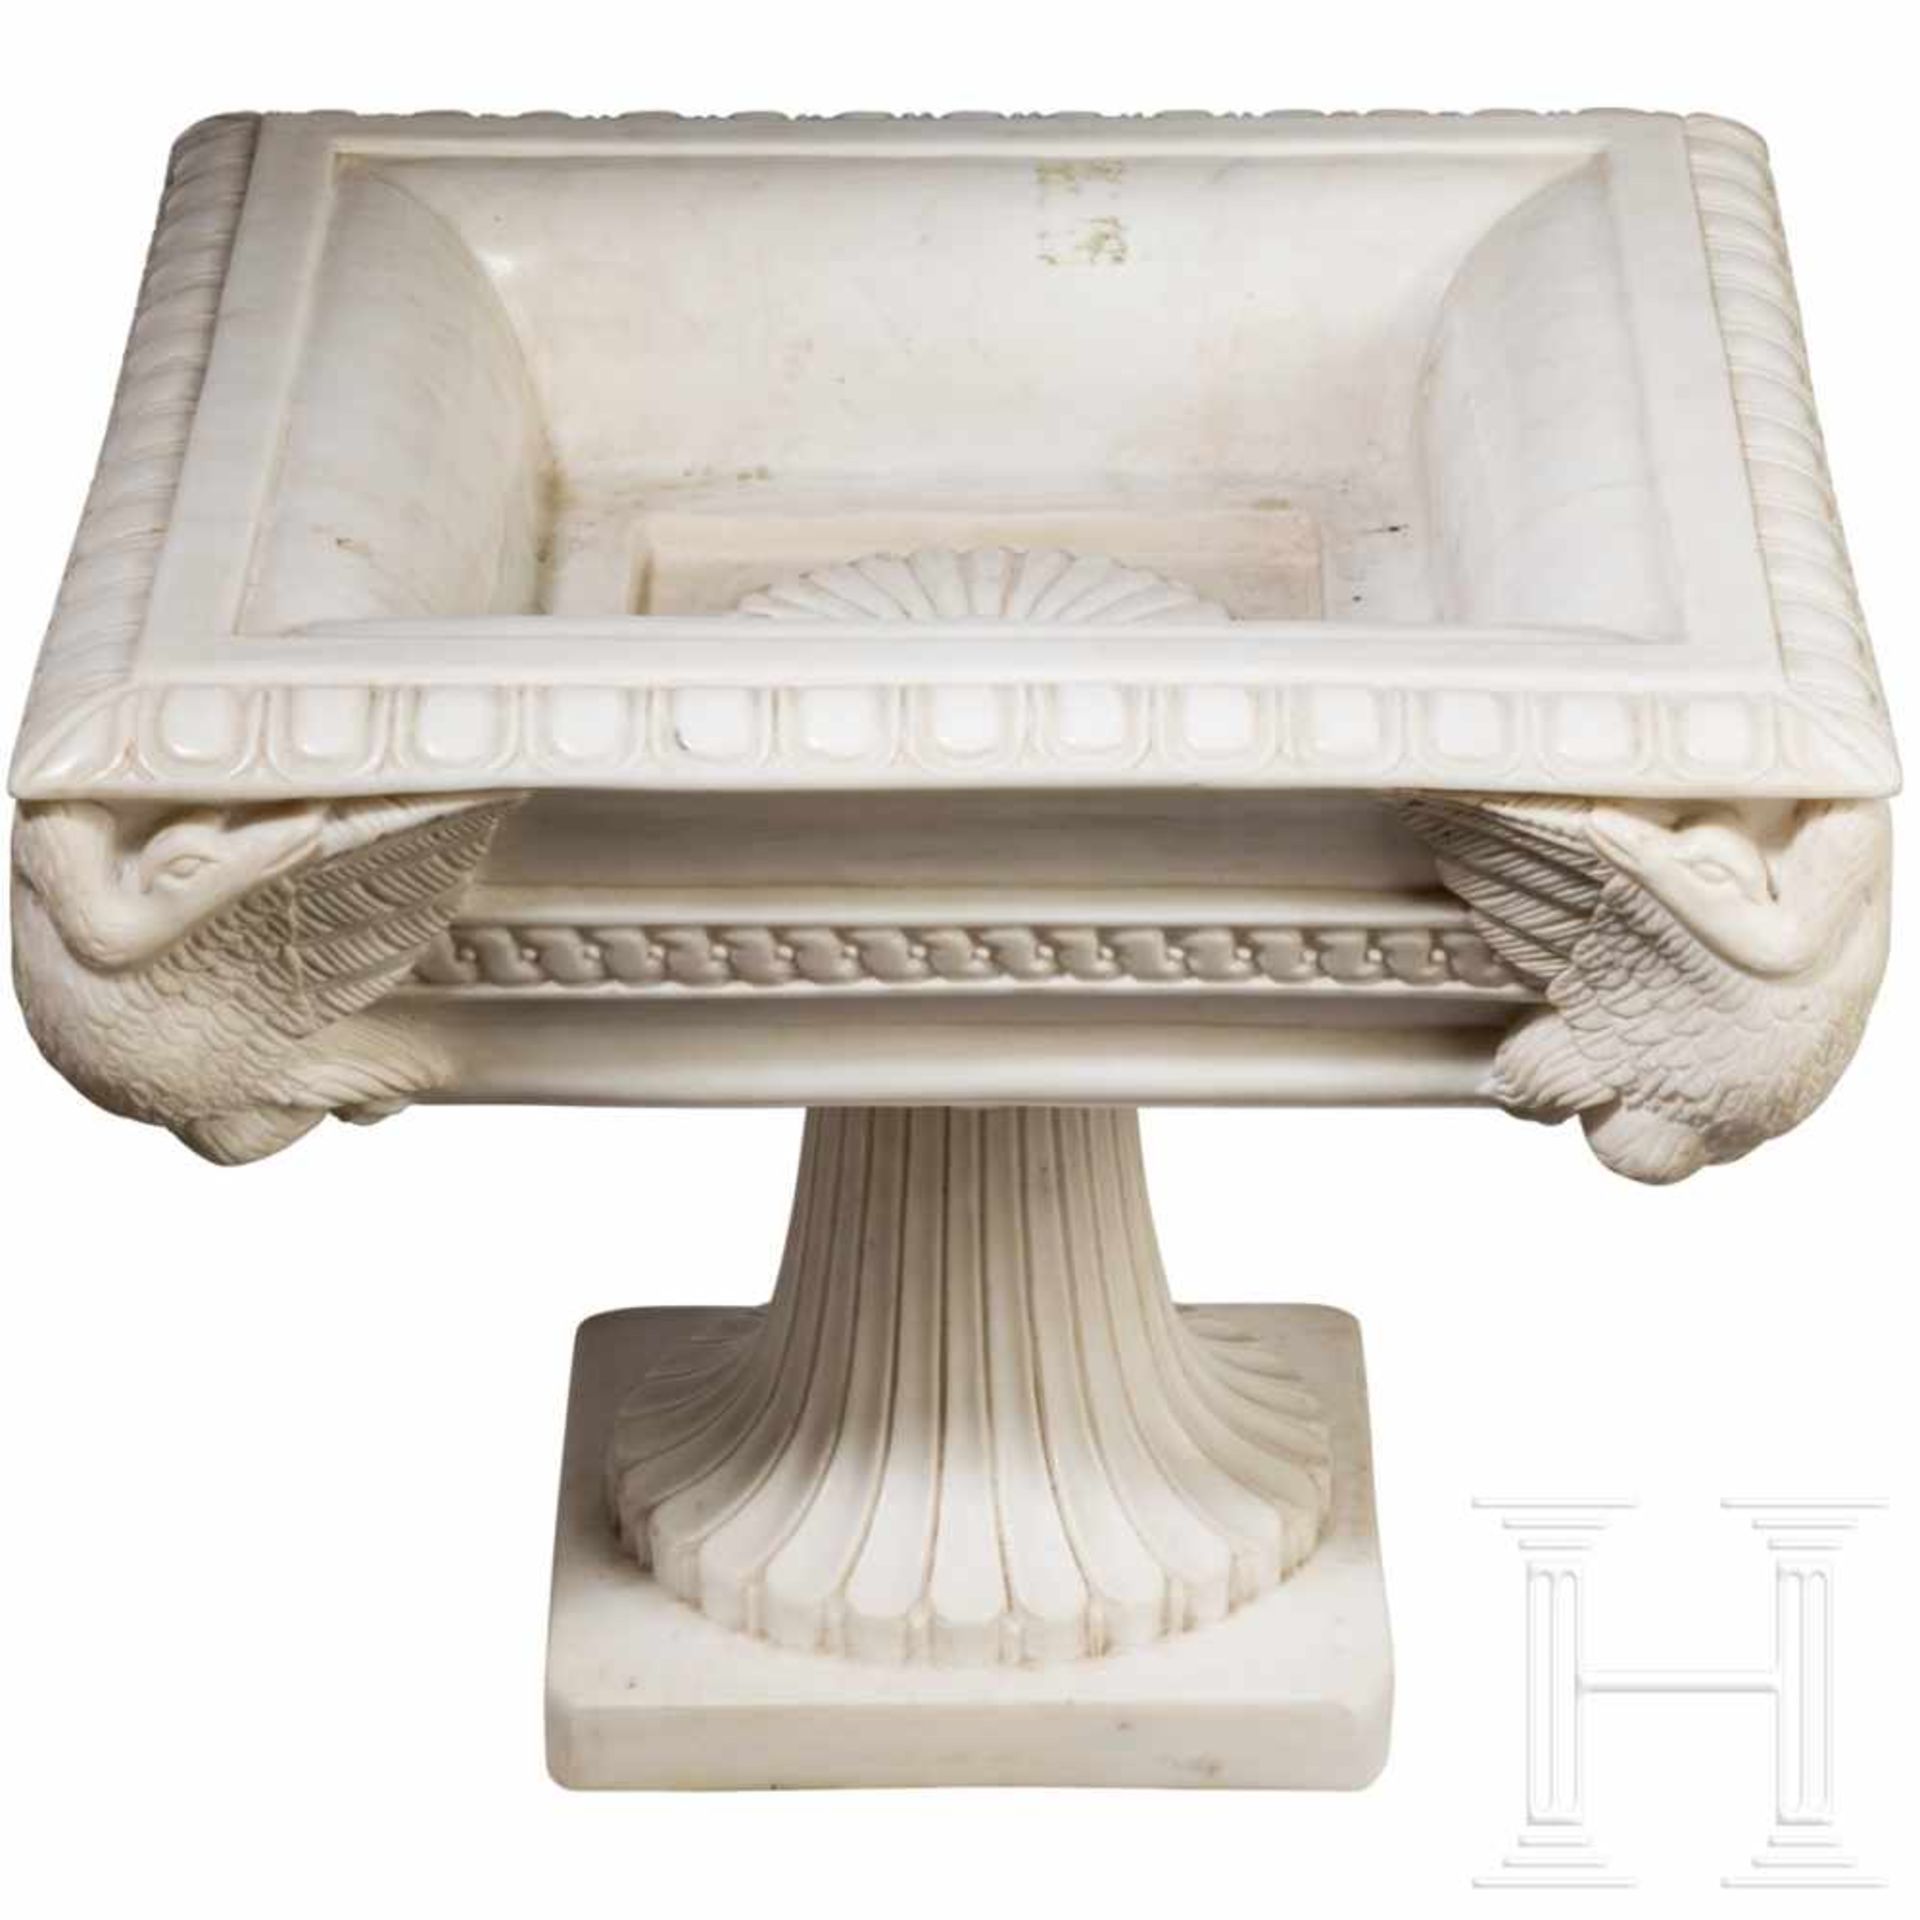 An unusual Italian tazza in classicist styleSolid, two-part design in white Carrara marble.